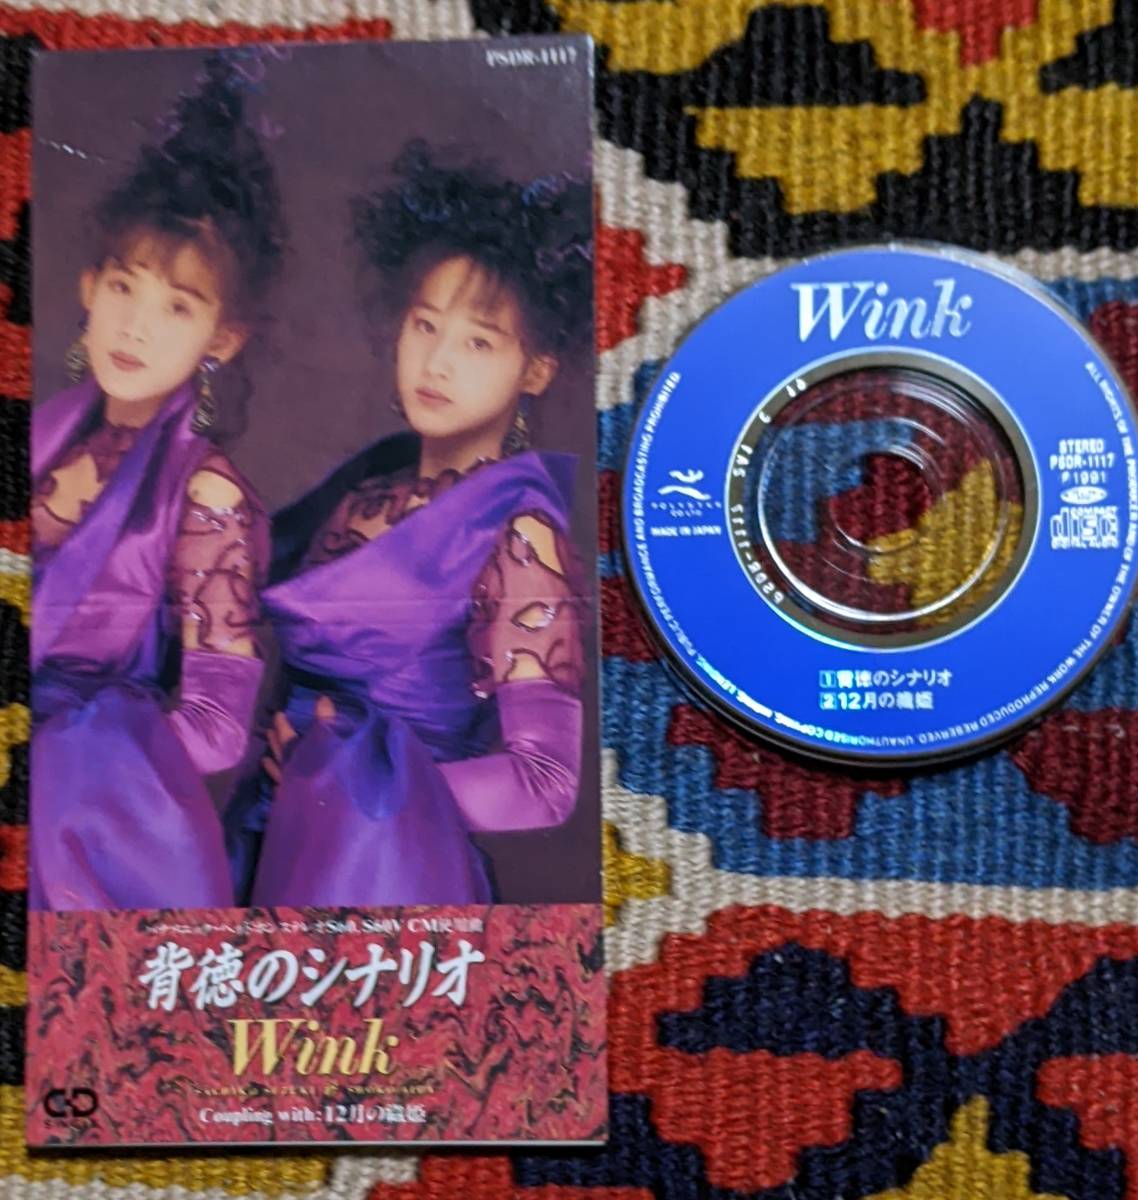 90's ウィンク Wink (8cm-CD) / 背徳のシナリオ　/ 12月の織姫 PSDR-1117 POLYSTAR 1991年 _画像1